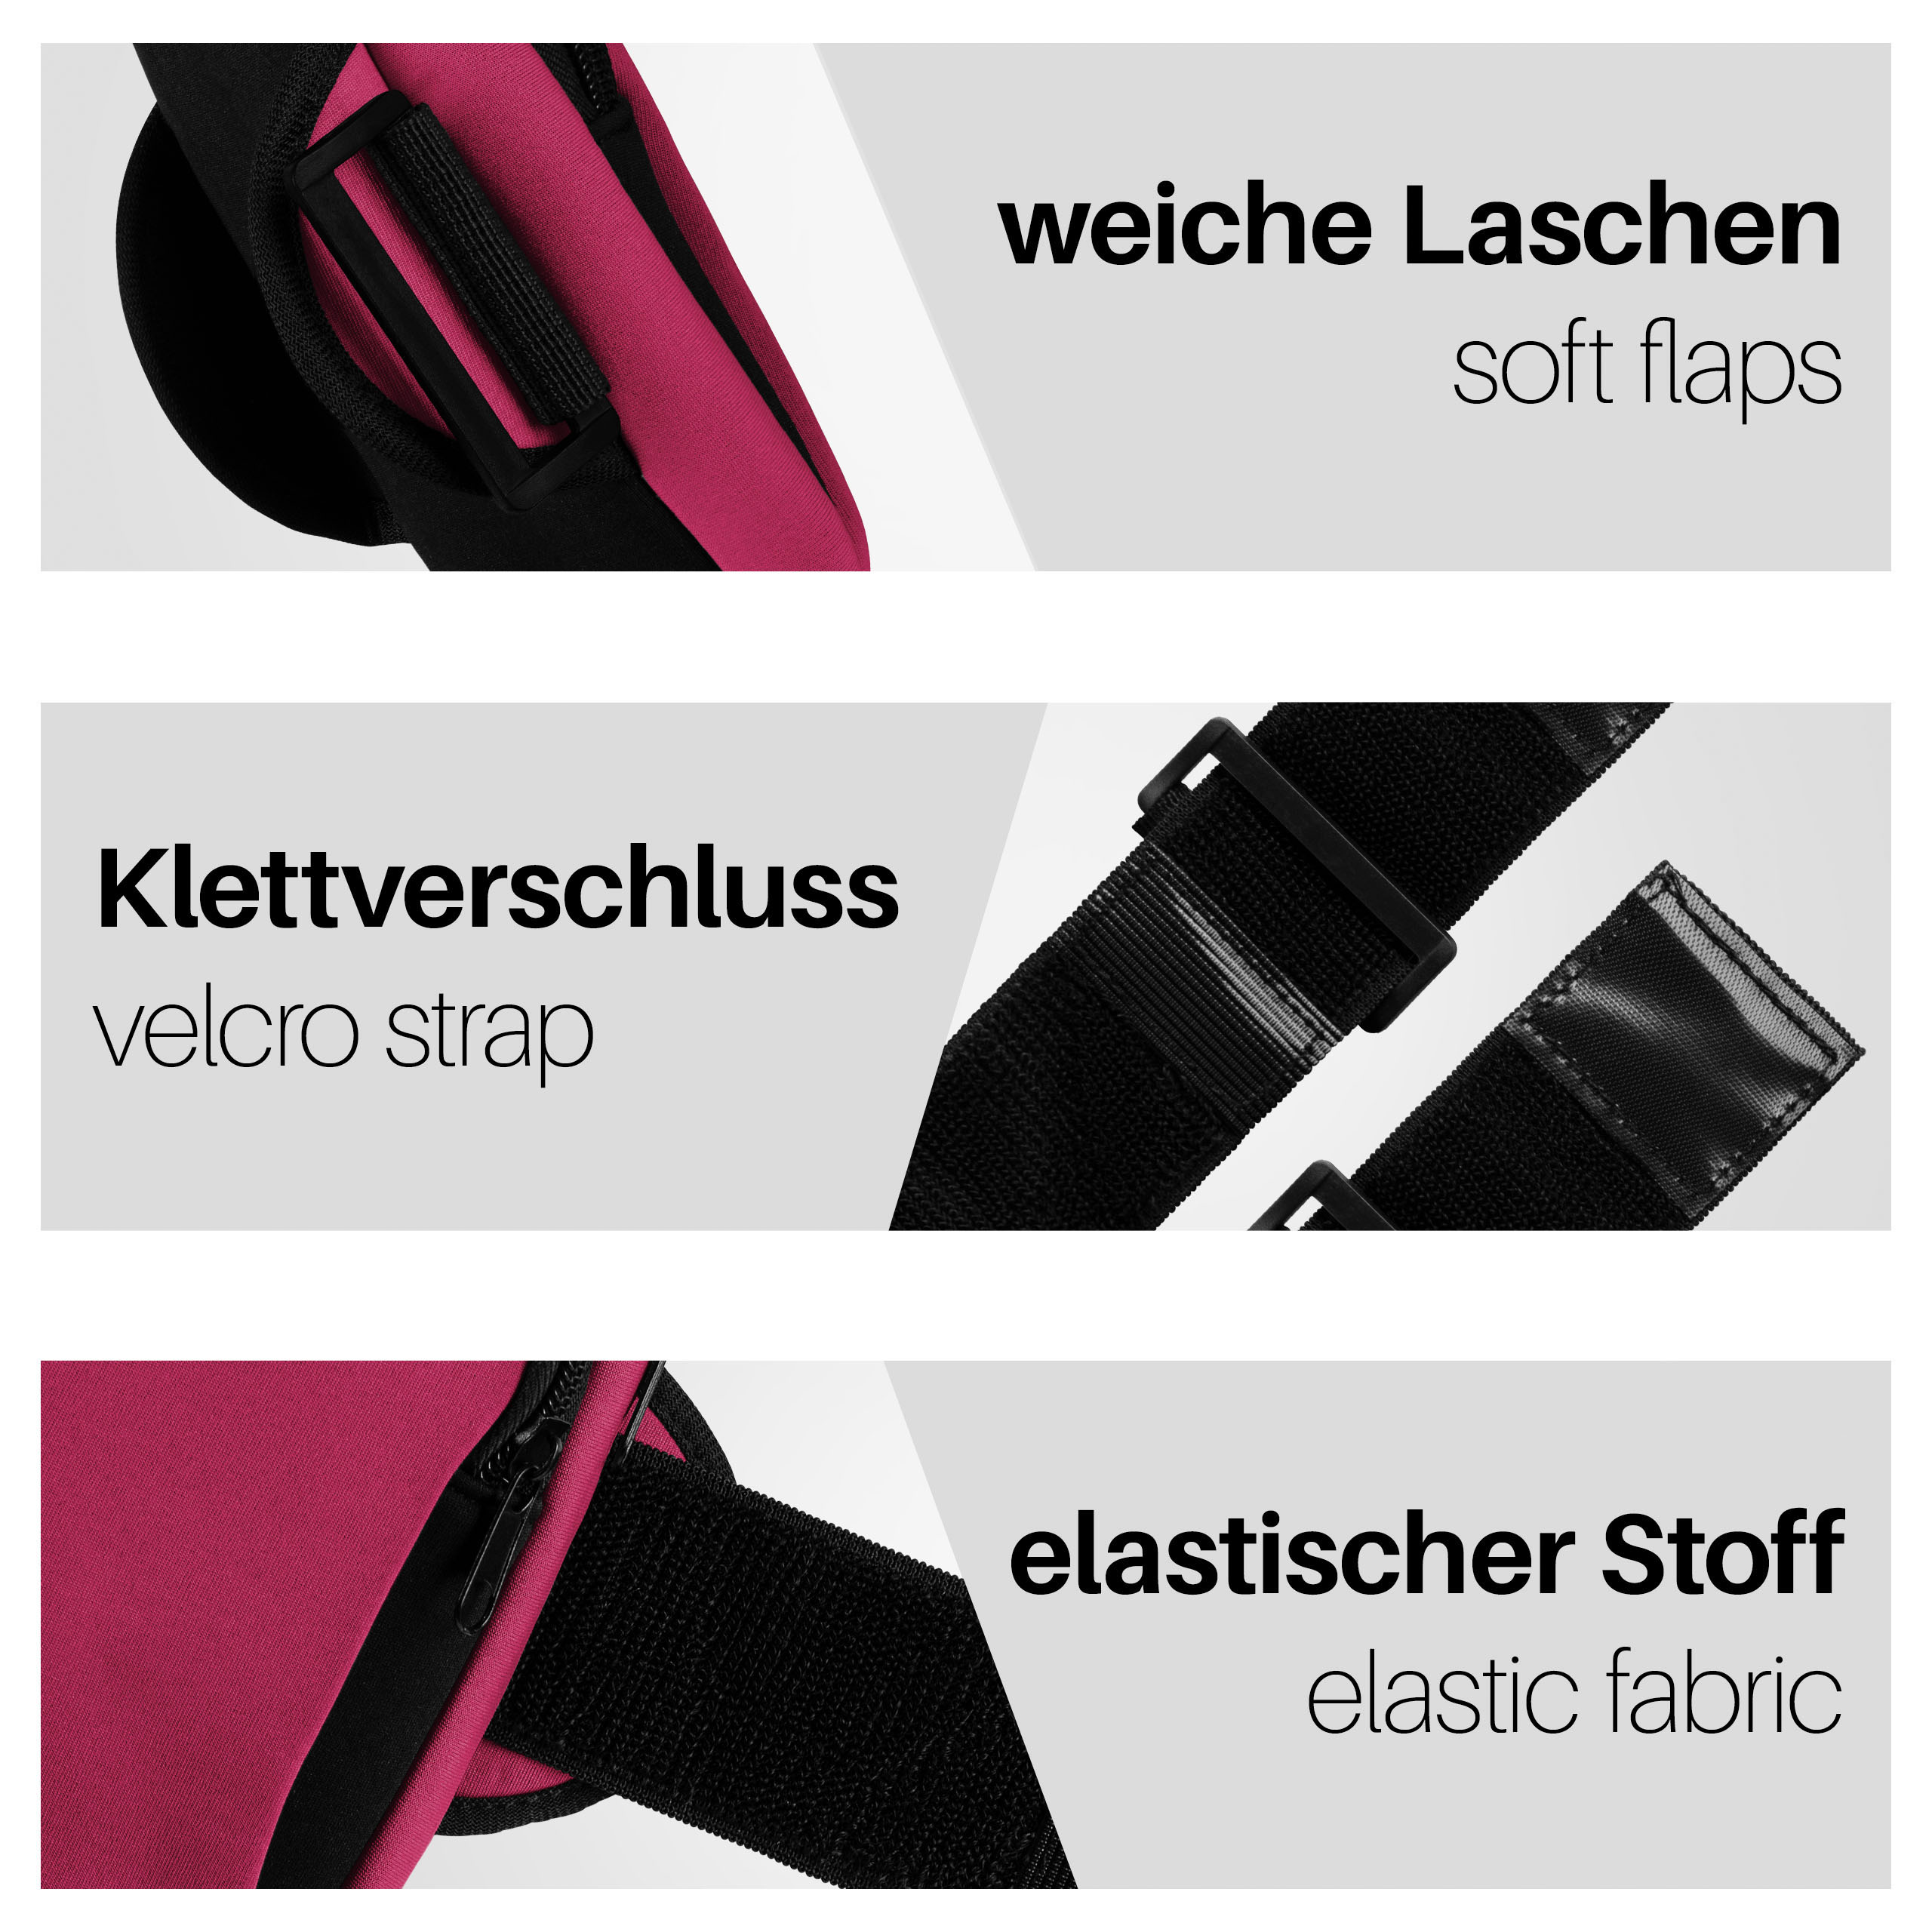 MOEX Sport Armband, Stylus 2, Cover, Pink Full LG